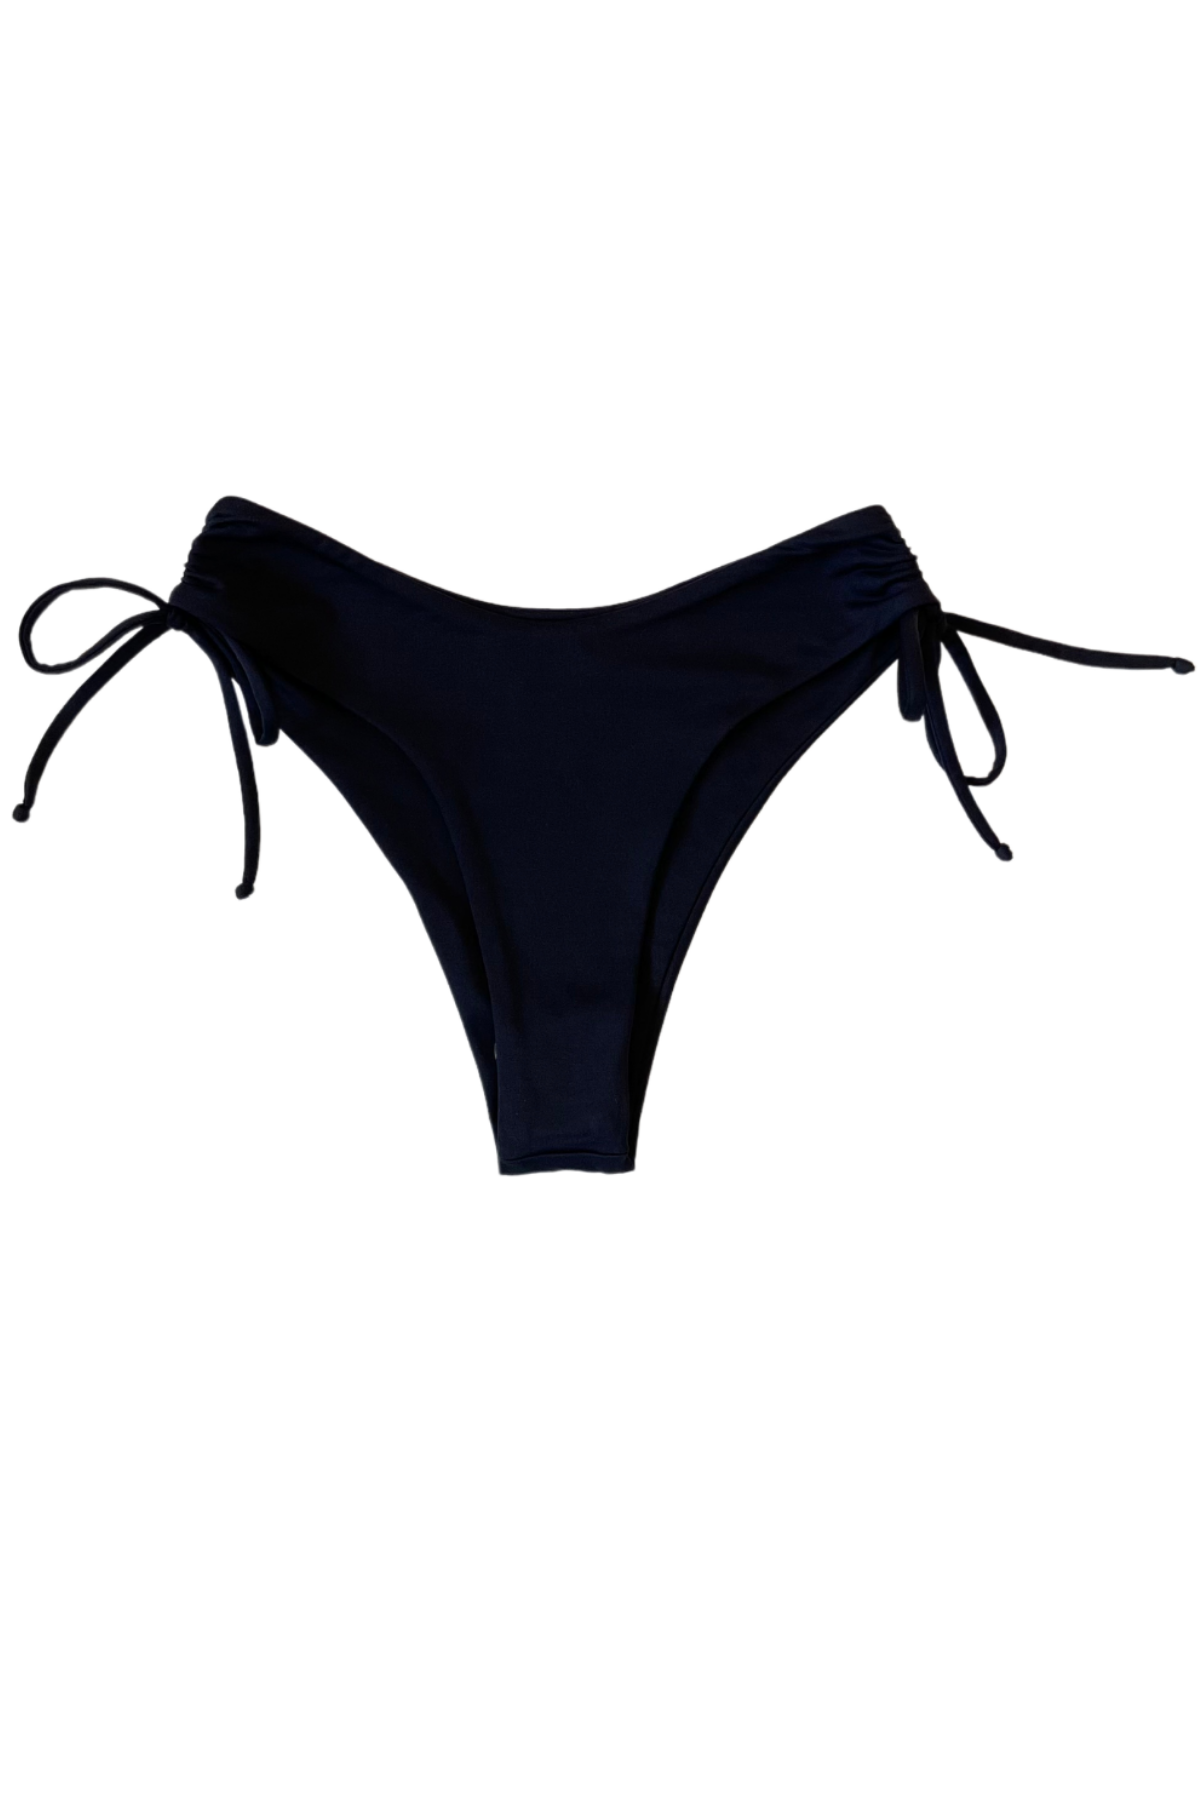 black Brazilian side scrunch bikini bottoms